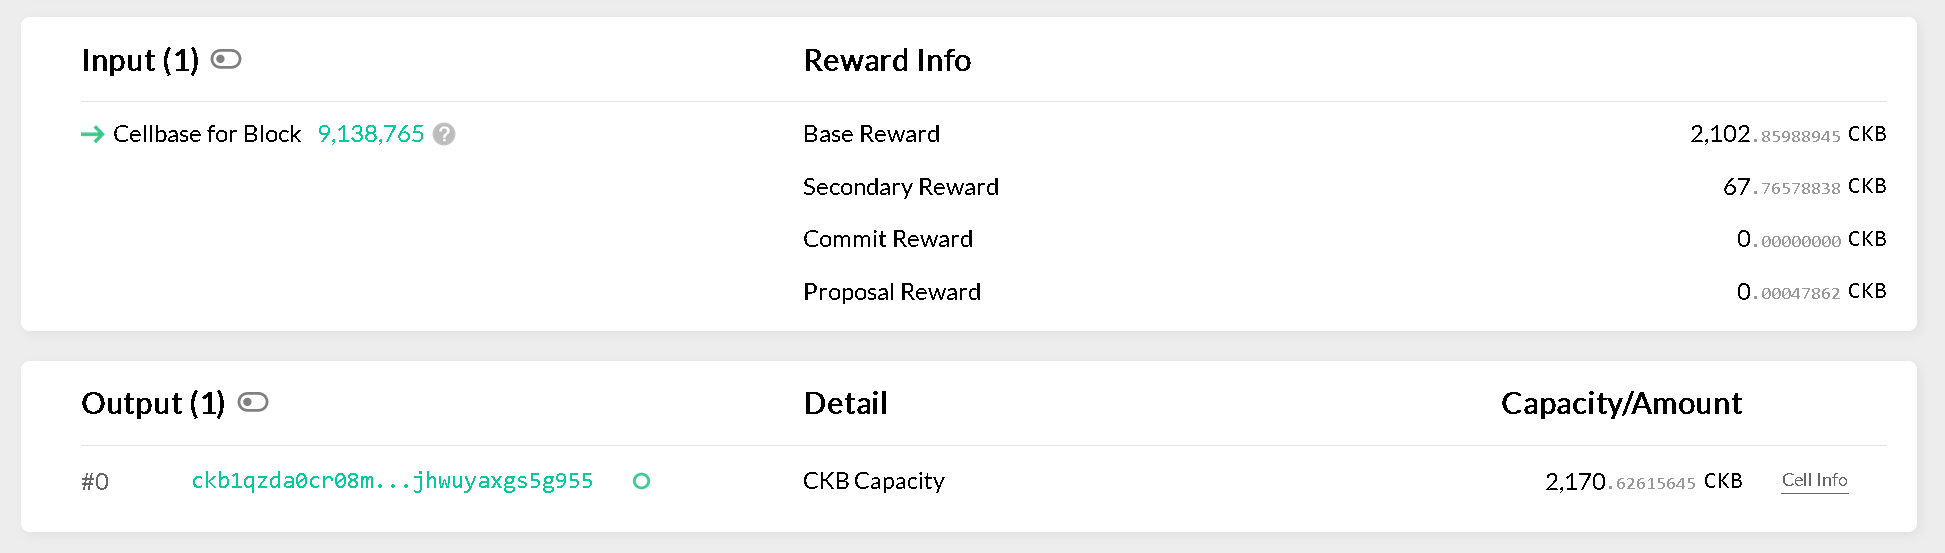 CKB block rewards include the base reward, secondary reward, commit reward and proposal reward